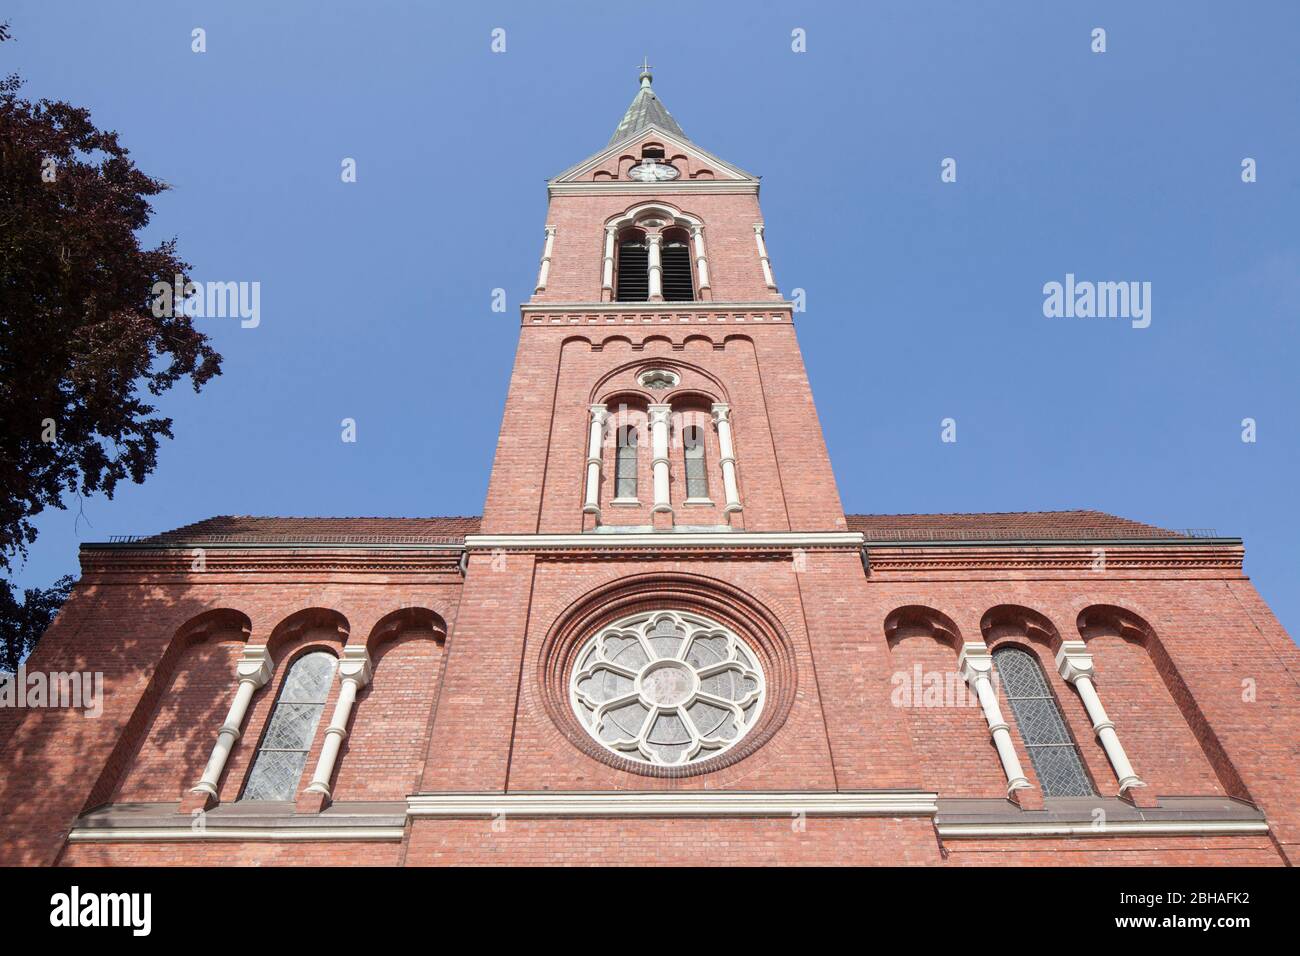 St. Gorgonius parish church, Goldenstedt, Vechta district, Lower Saxony, Germany, Europe Stock Photo